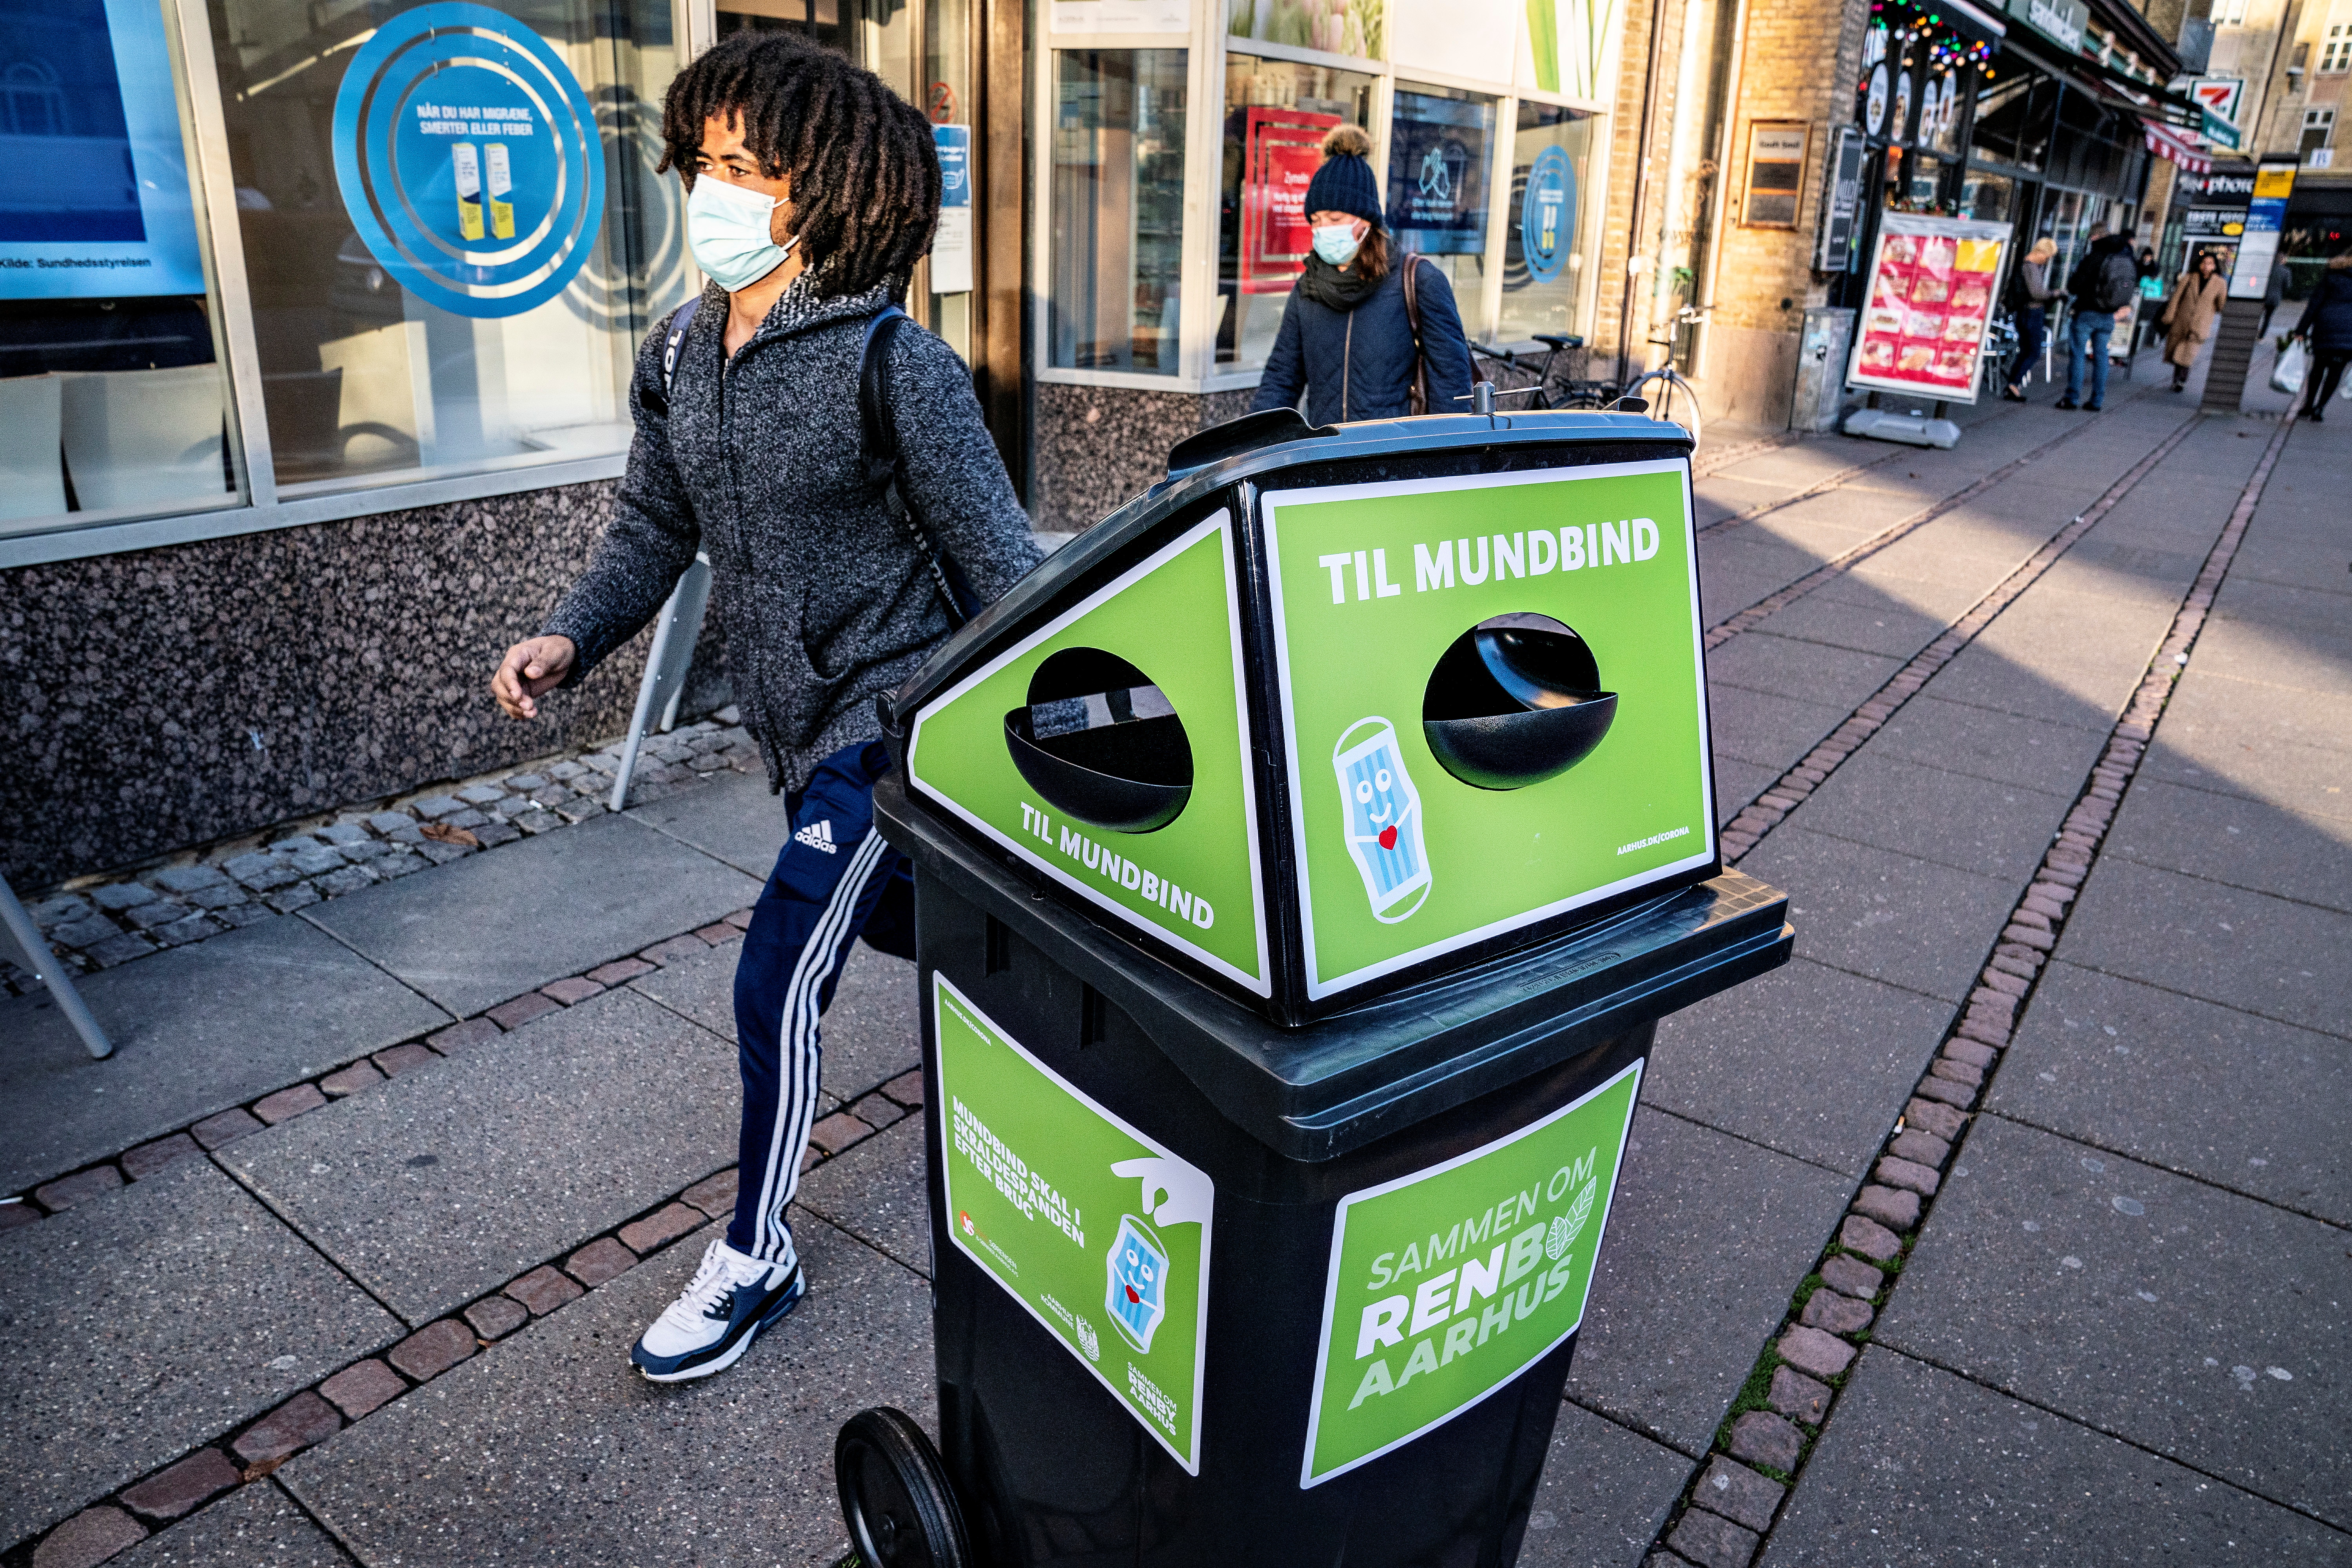 Pedestrians pass a waste bin for disposable masks in Aarhus, Denmark November 23, 2020. Ritzau Scanpix/Henning Bagger via REUTERS/File Photo